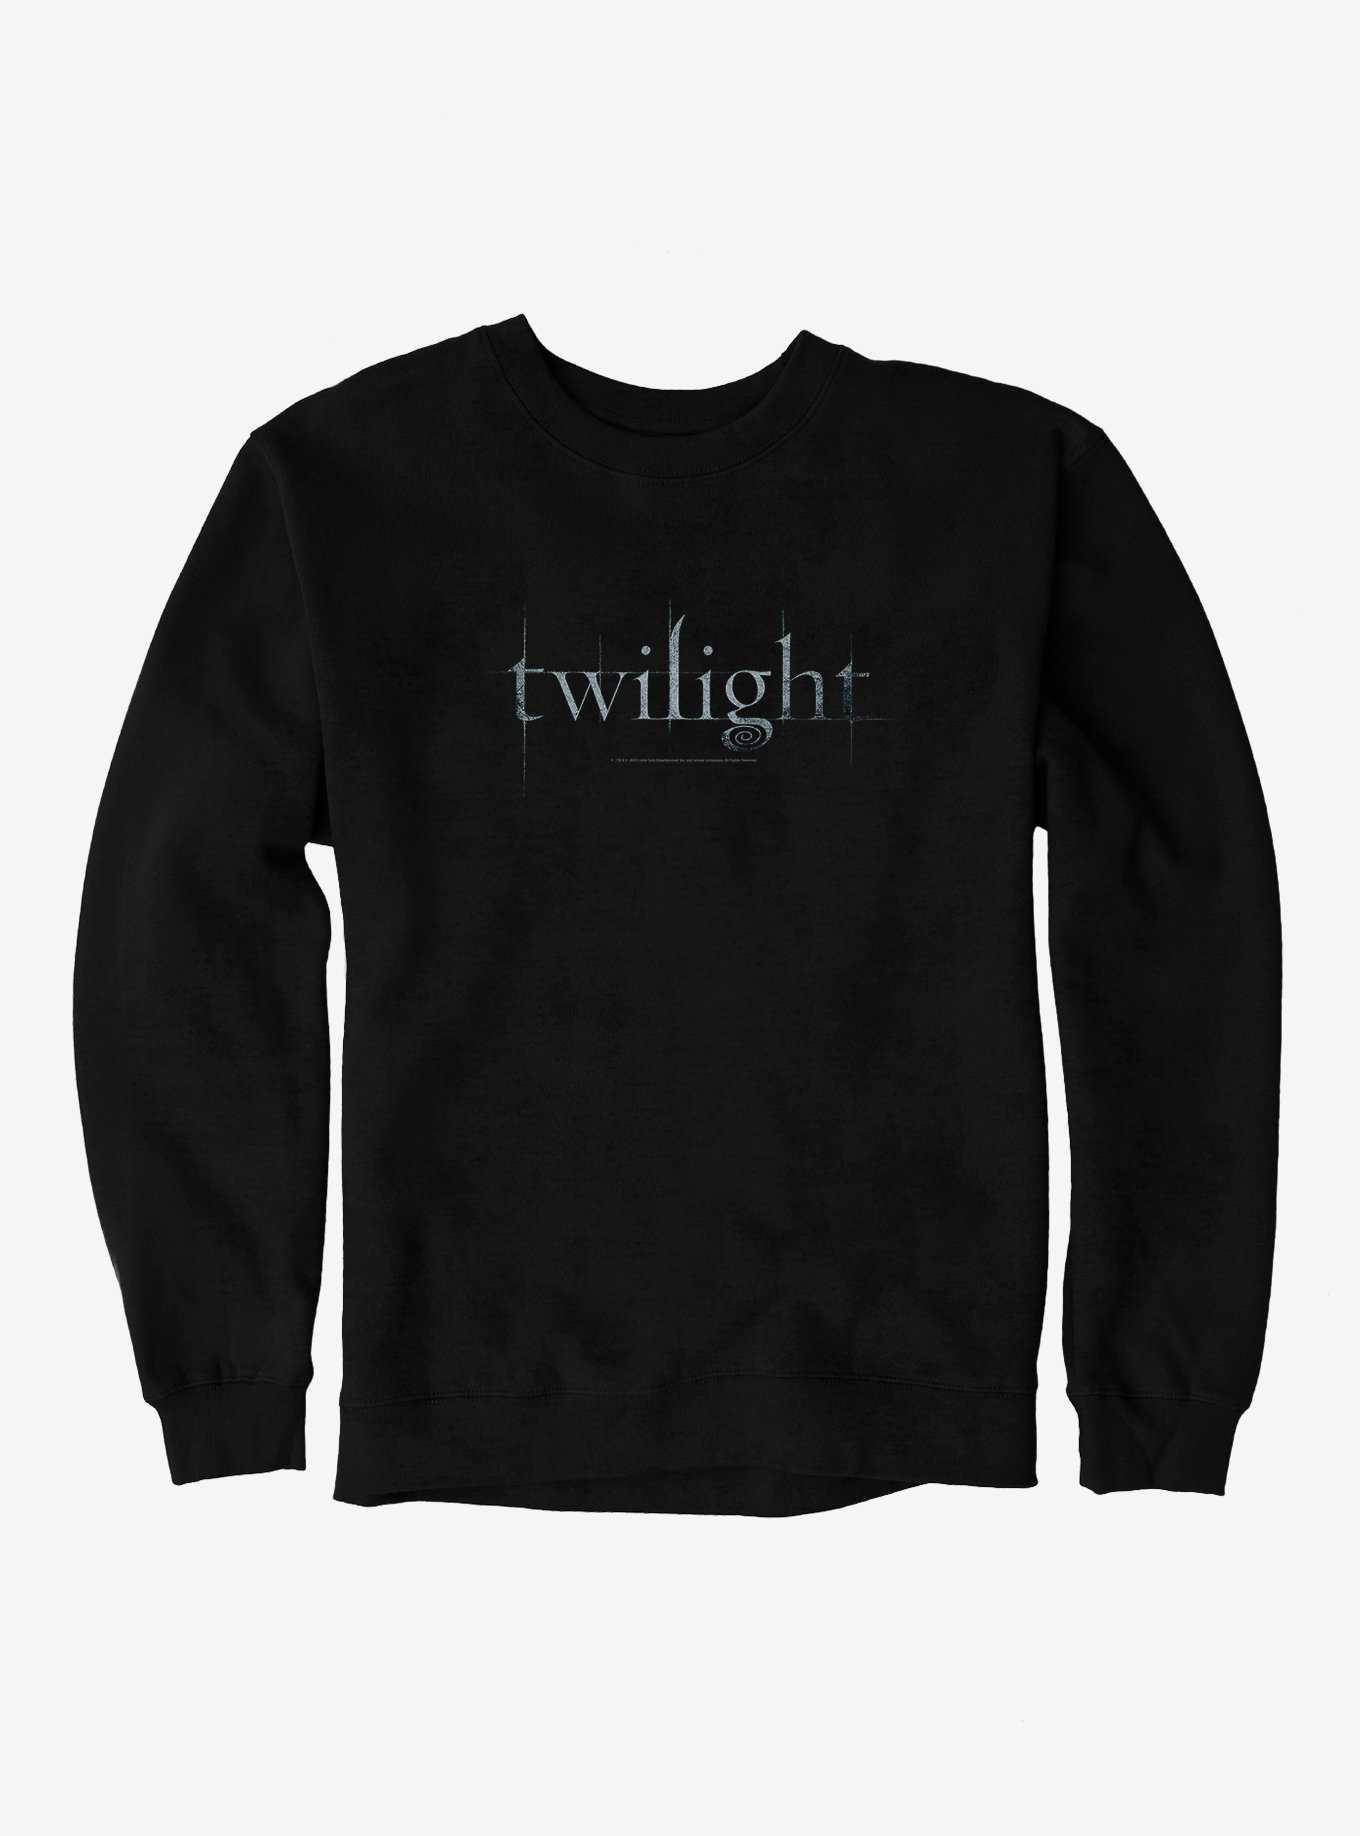 Twilight breaking dawn T-shirt Black Fitted size small Edward Women’s